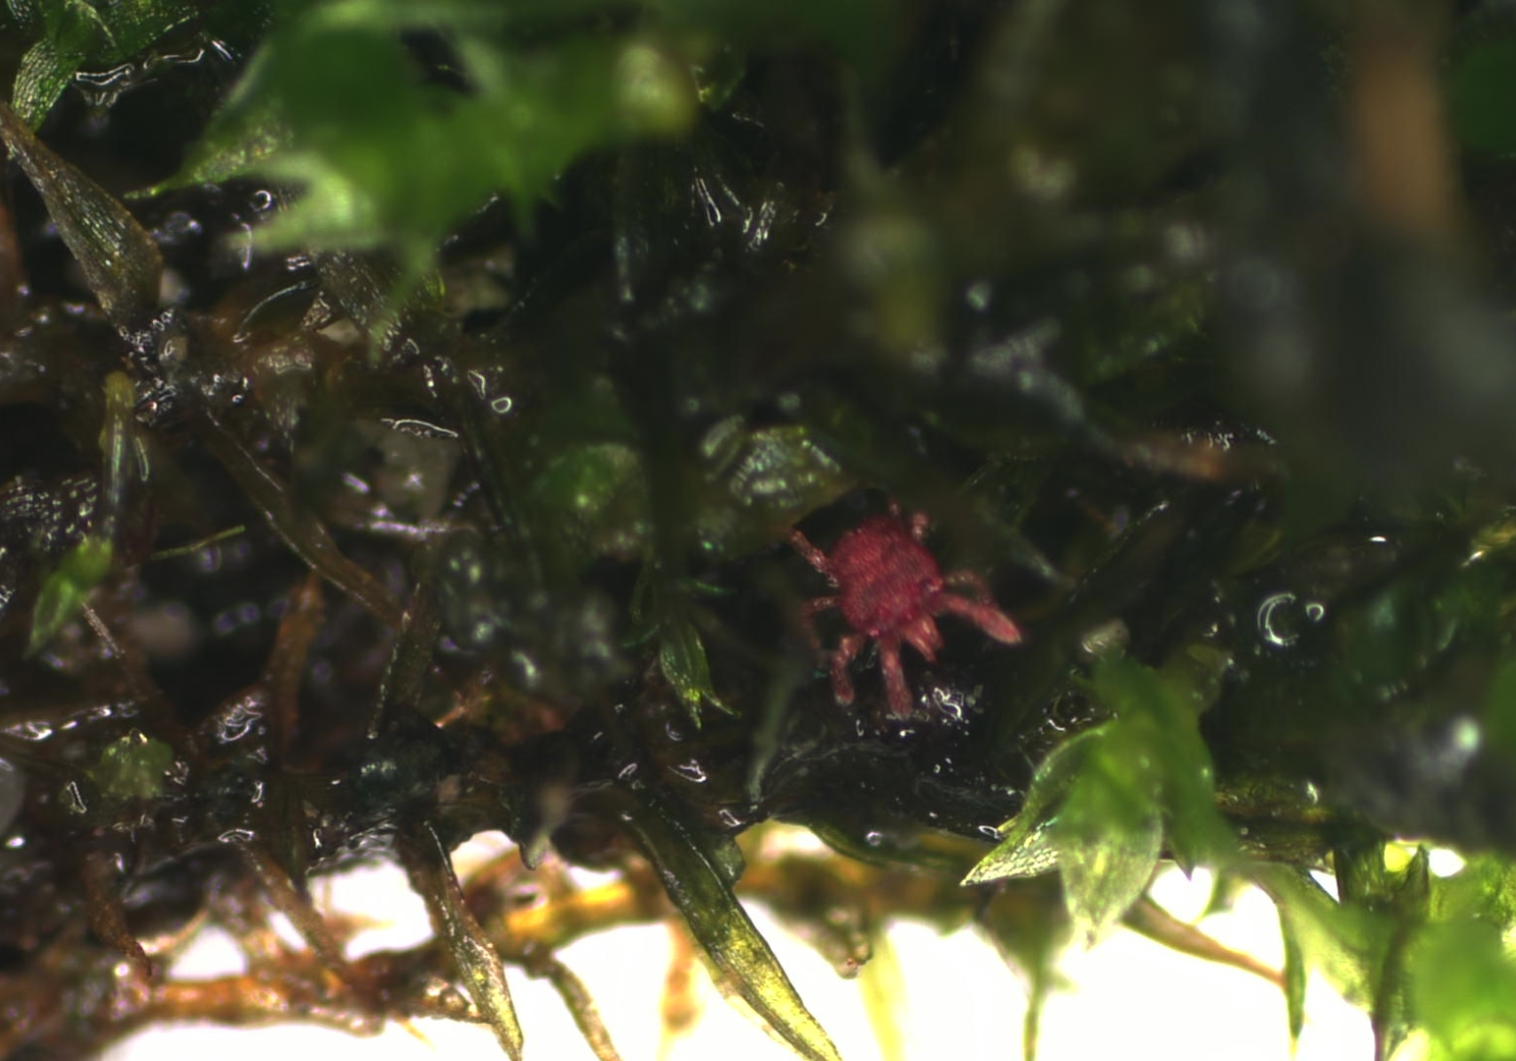 Macro red spider video taken by TrueChrome II